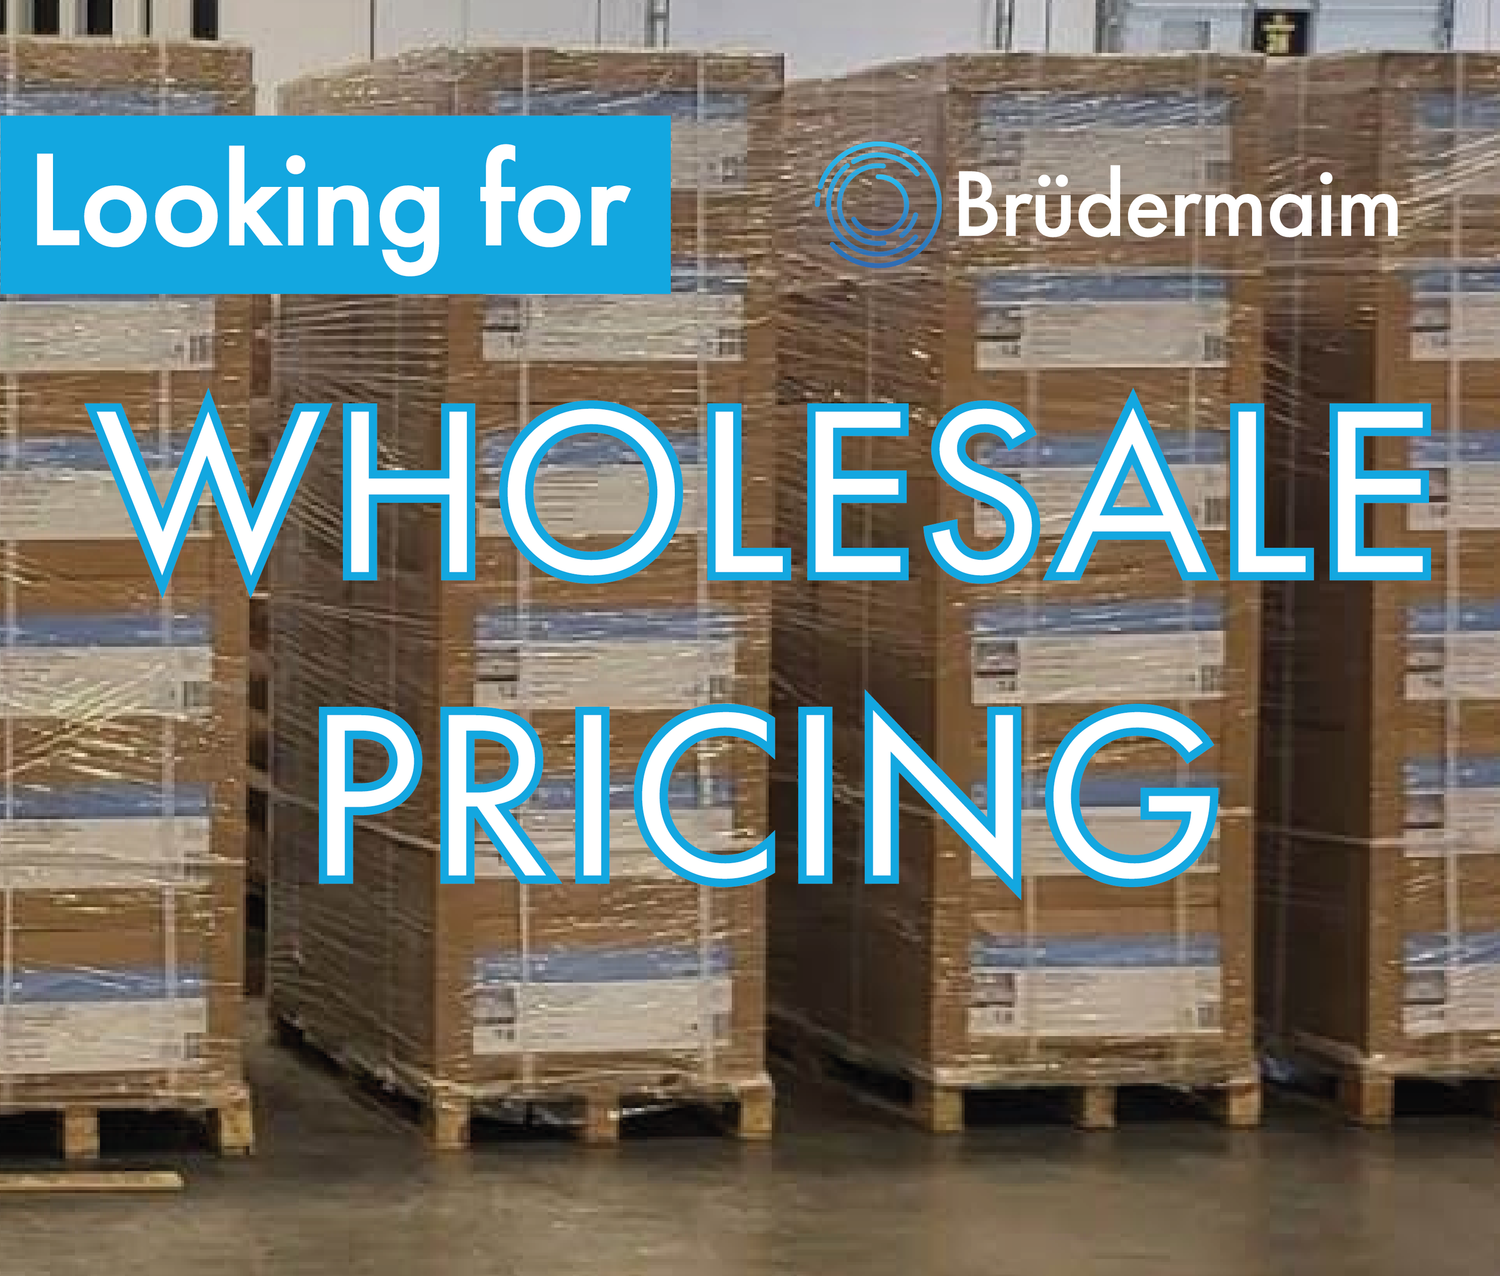 Brudermaim B2B - Wholesale Pricing